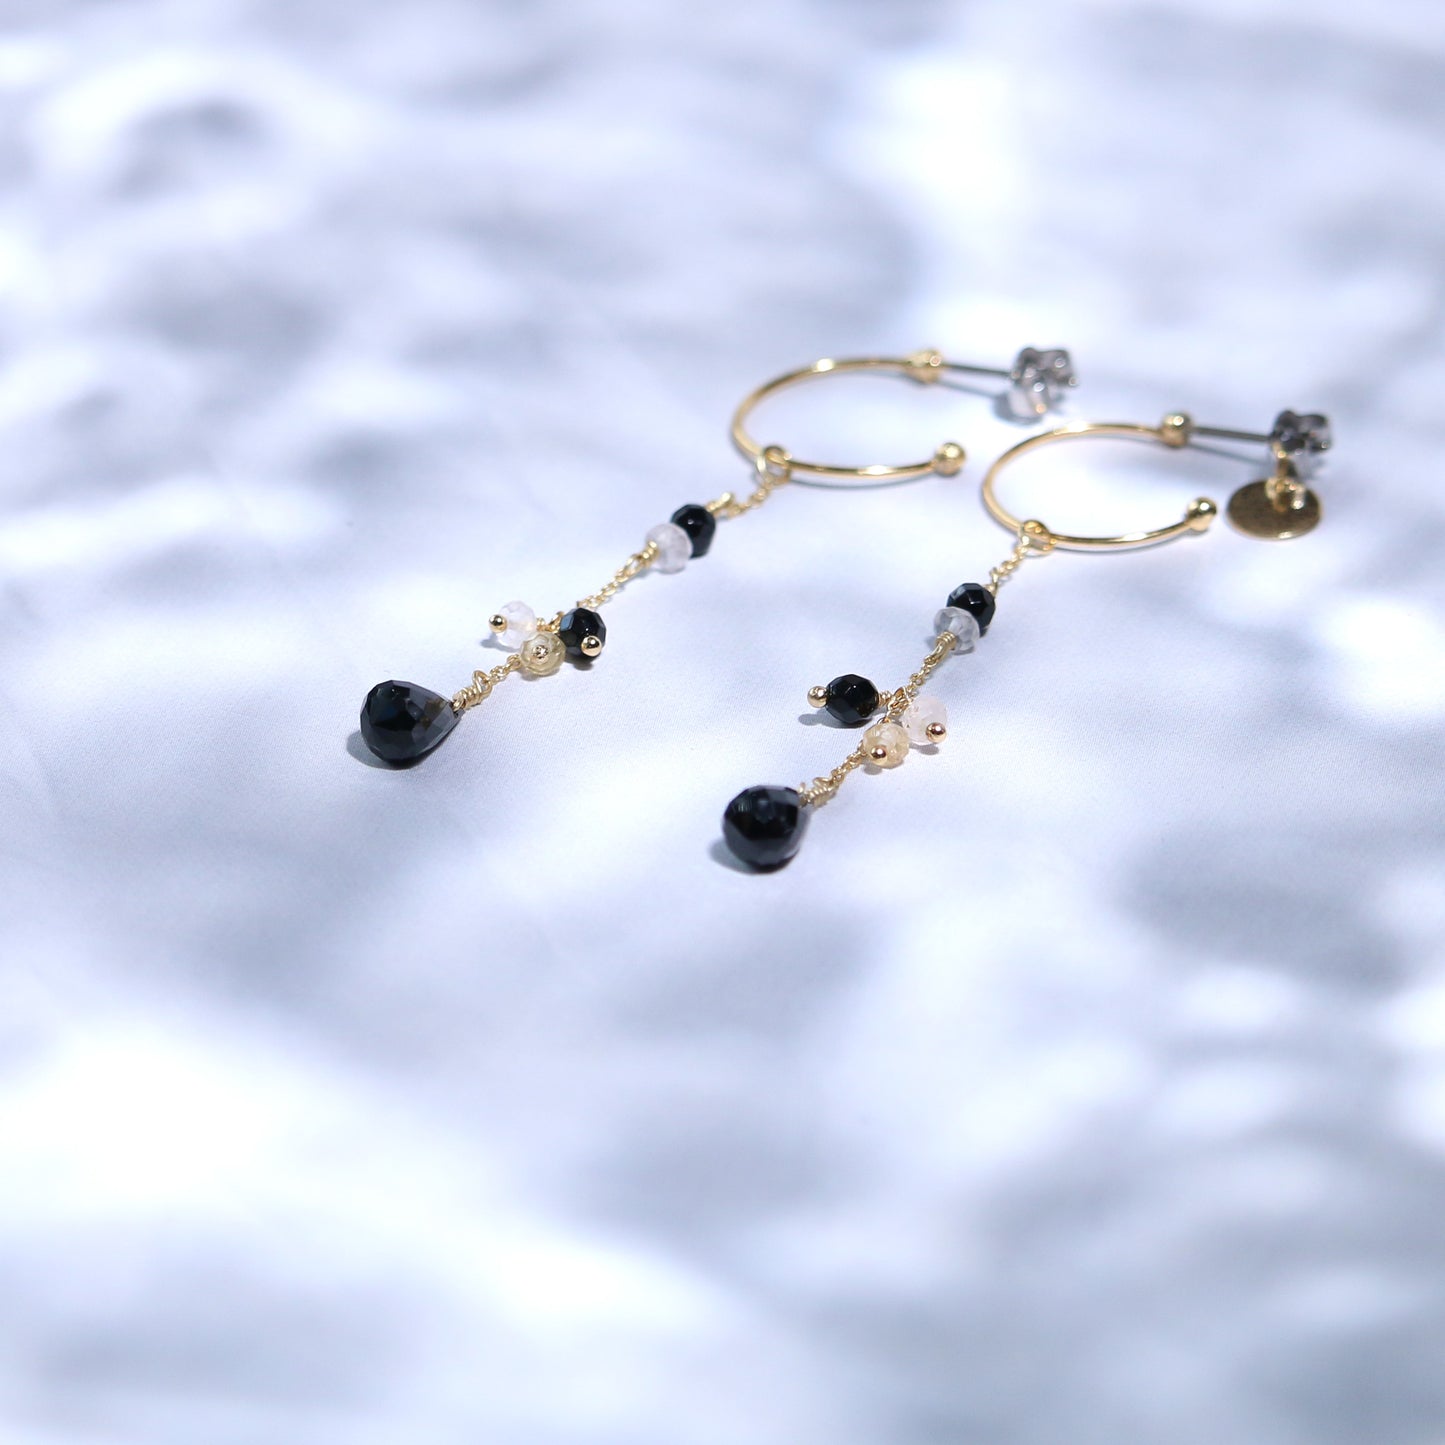 Black Spinel long earrings